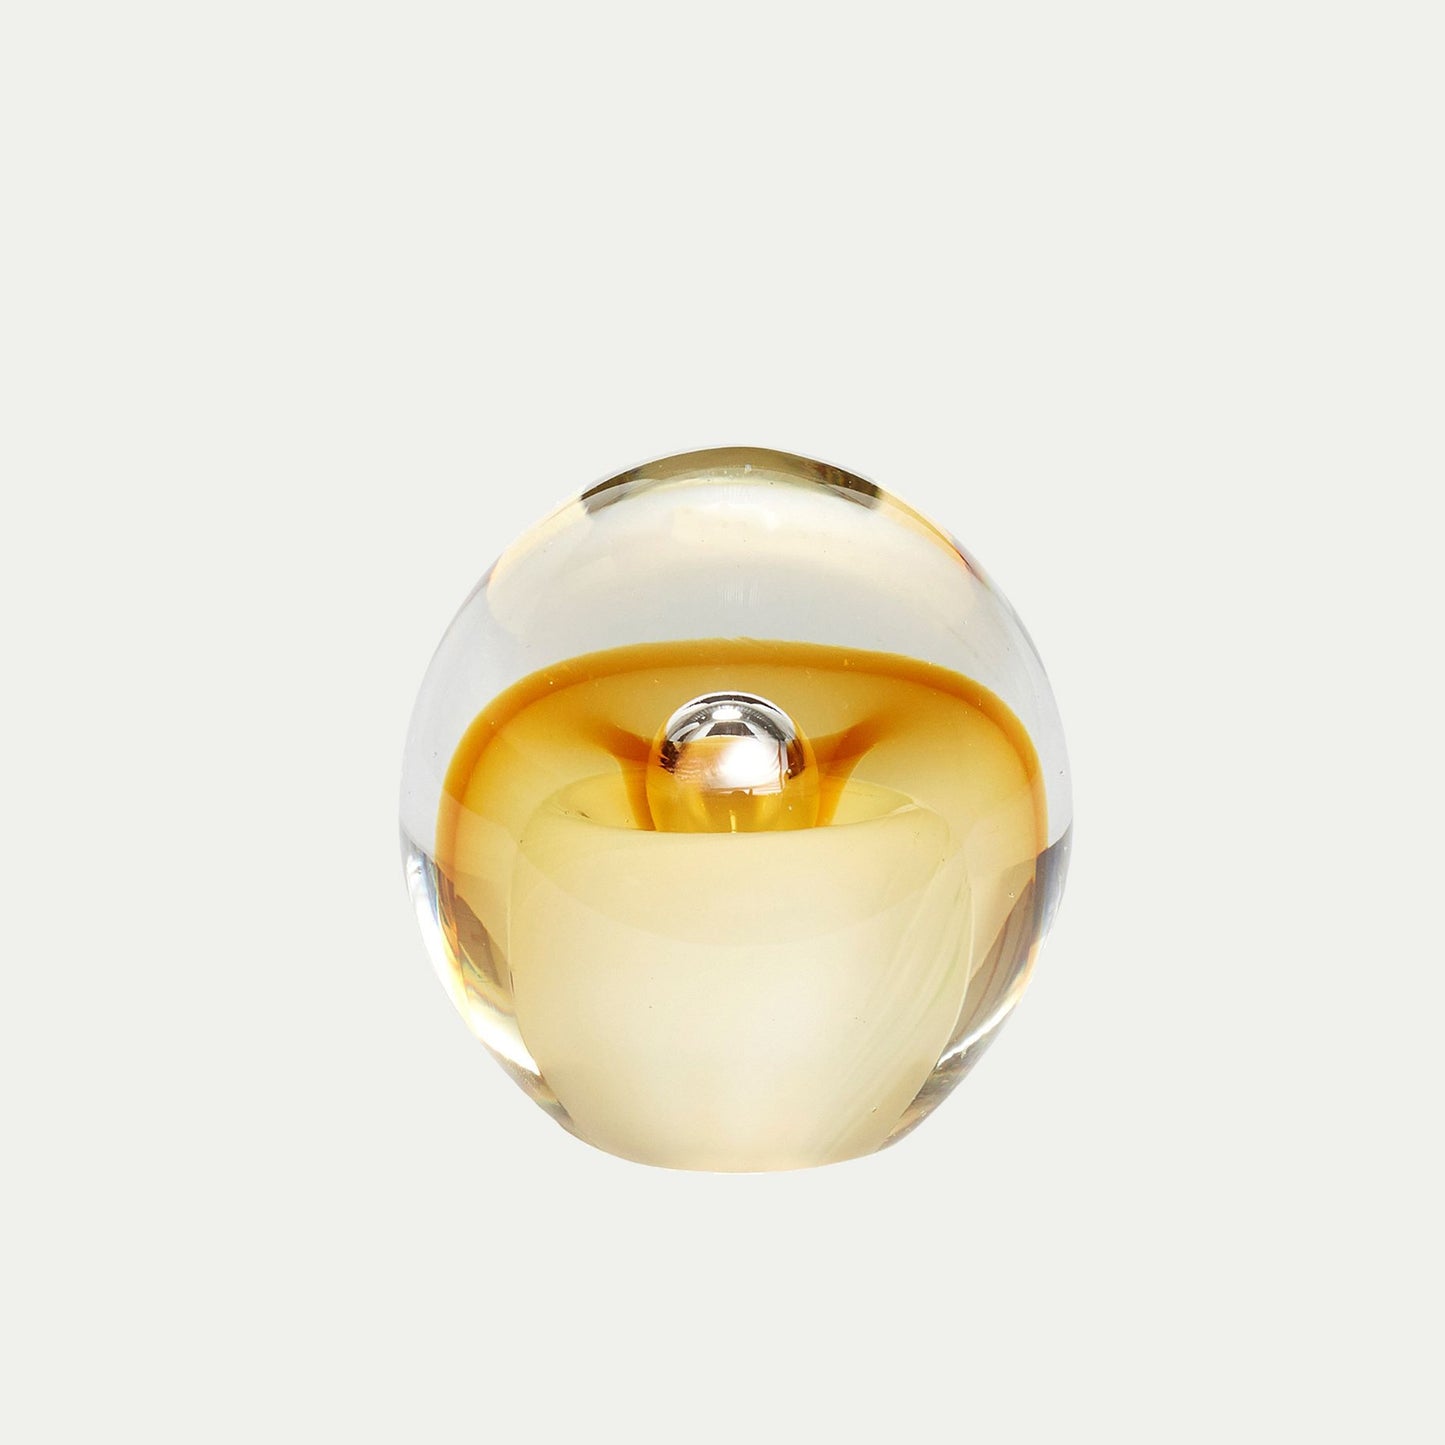 Hubsch Interior objet d’art paperweight in honey amber and cream on white background